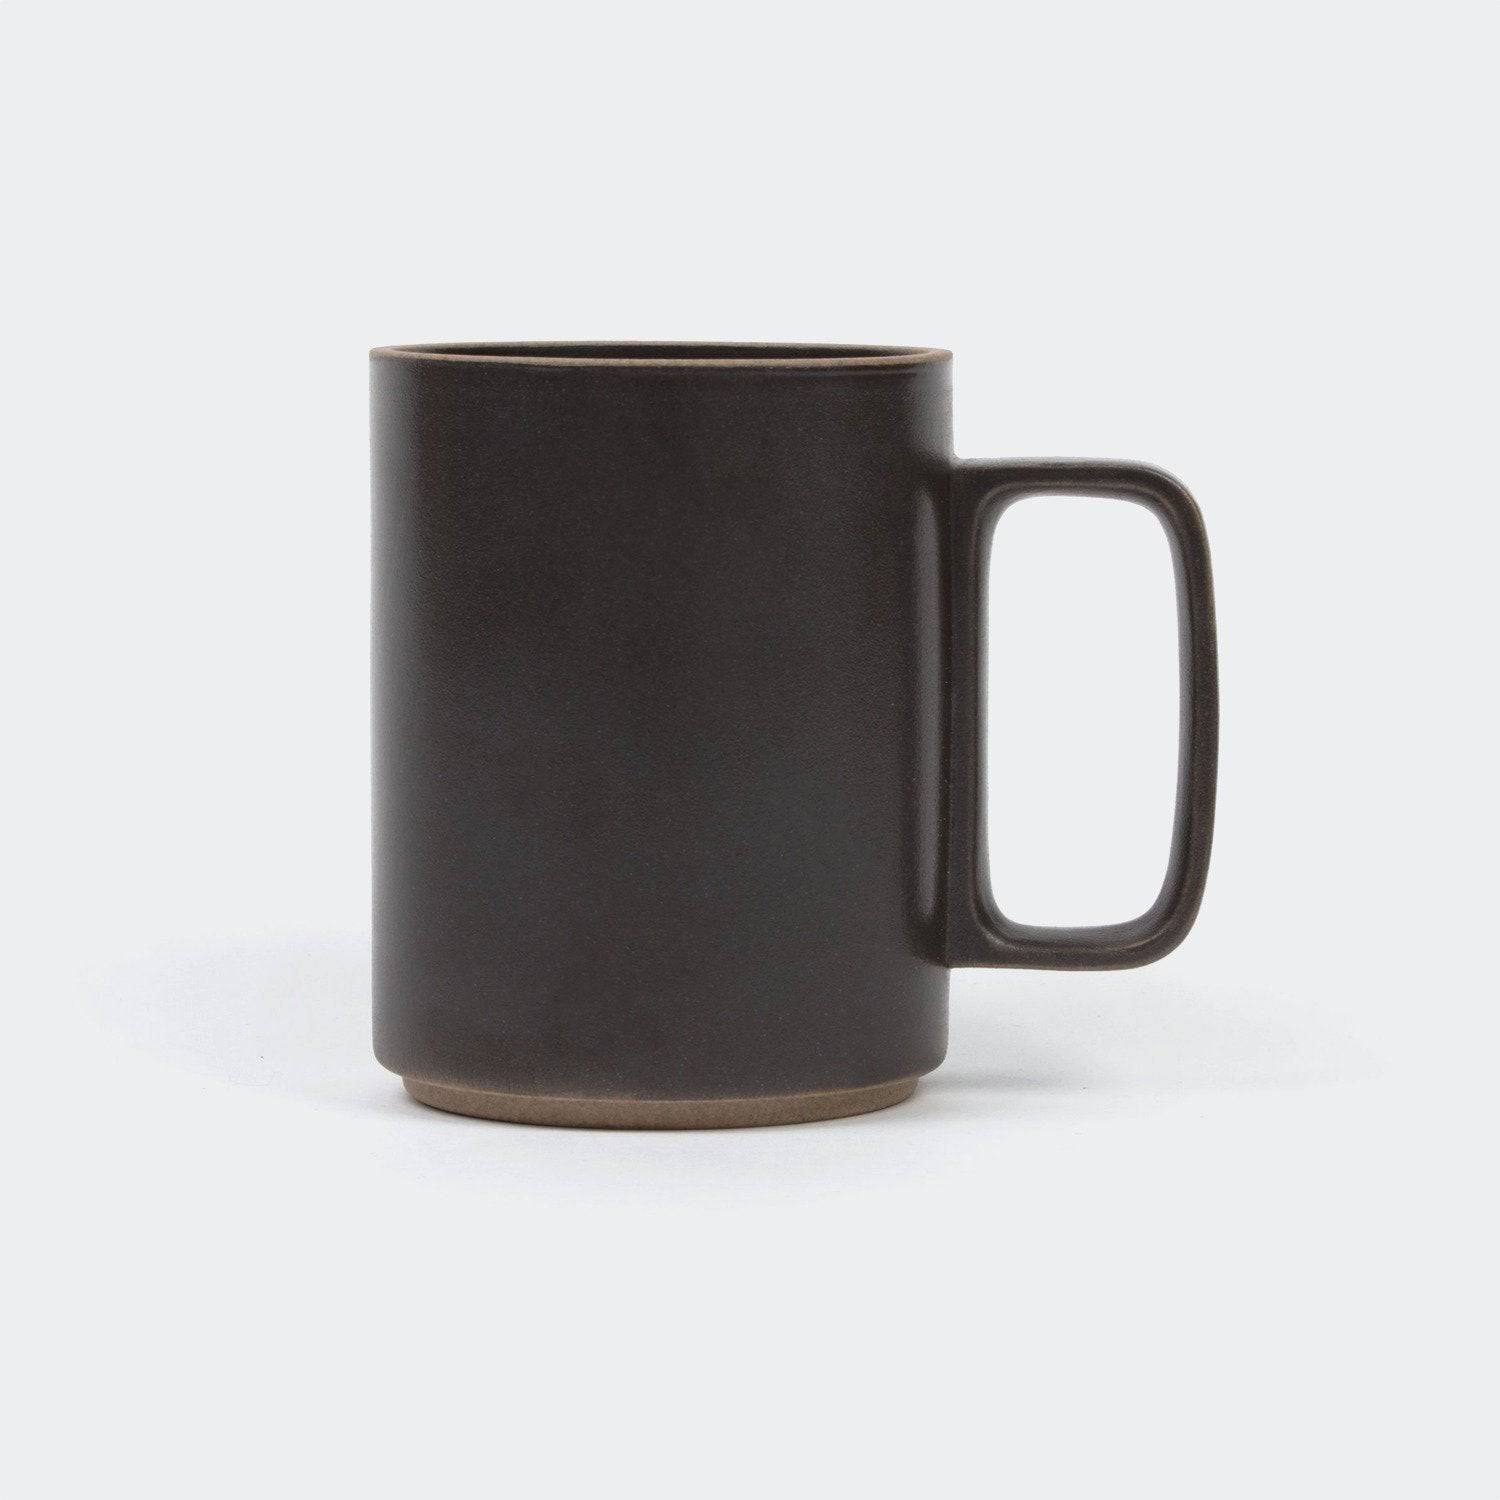 Hasami Porcelain Mug in Black 15 oz. - KANSO #select size_15 oz.